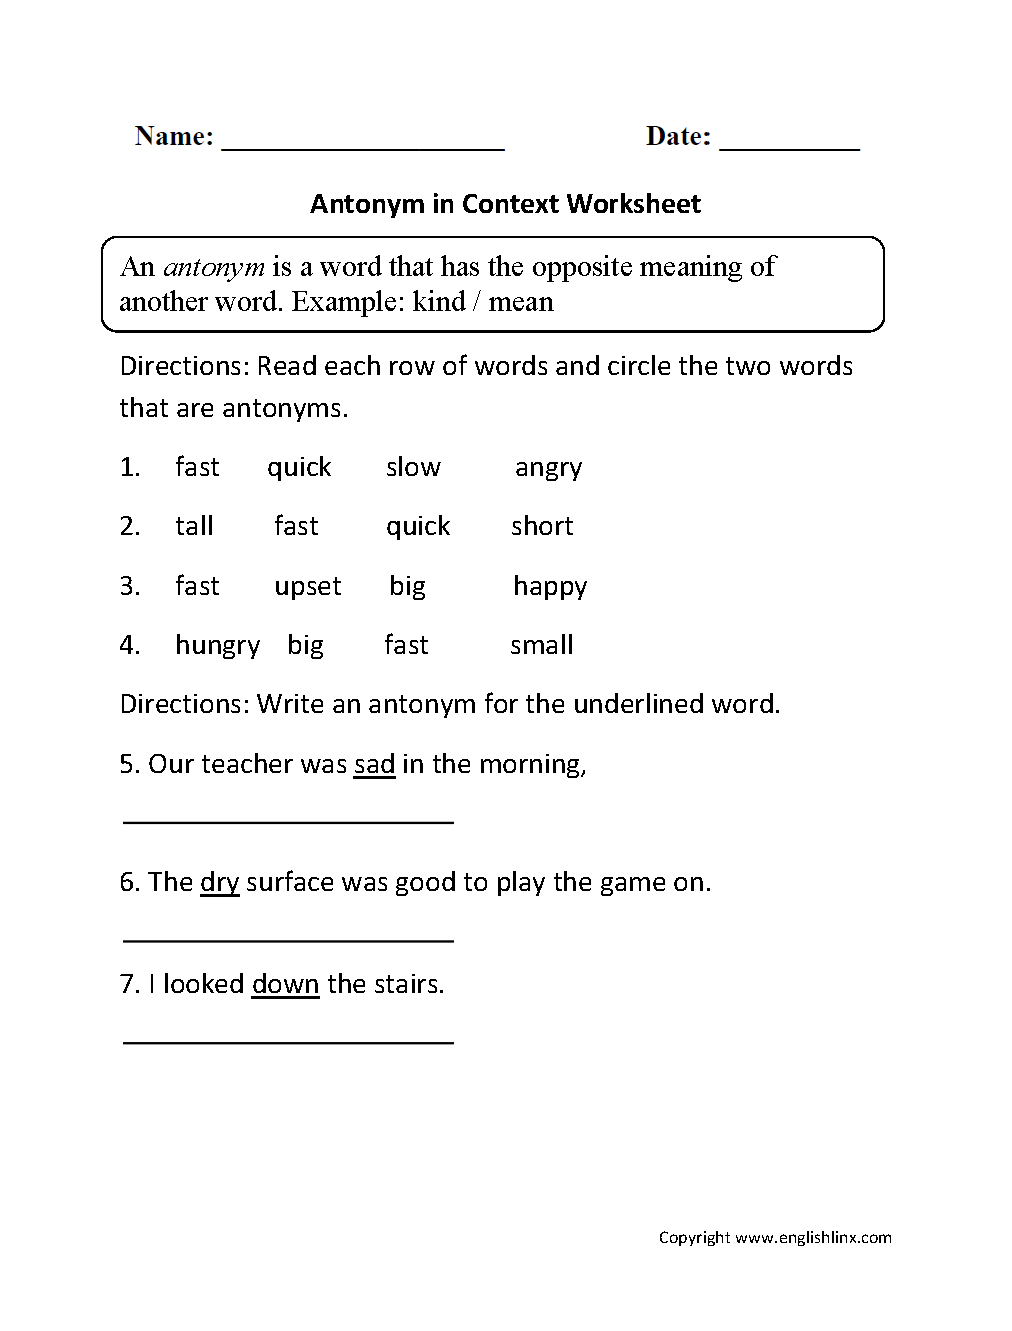 Antonyms in Context Worksheet